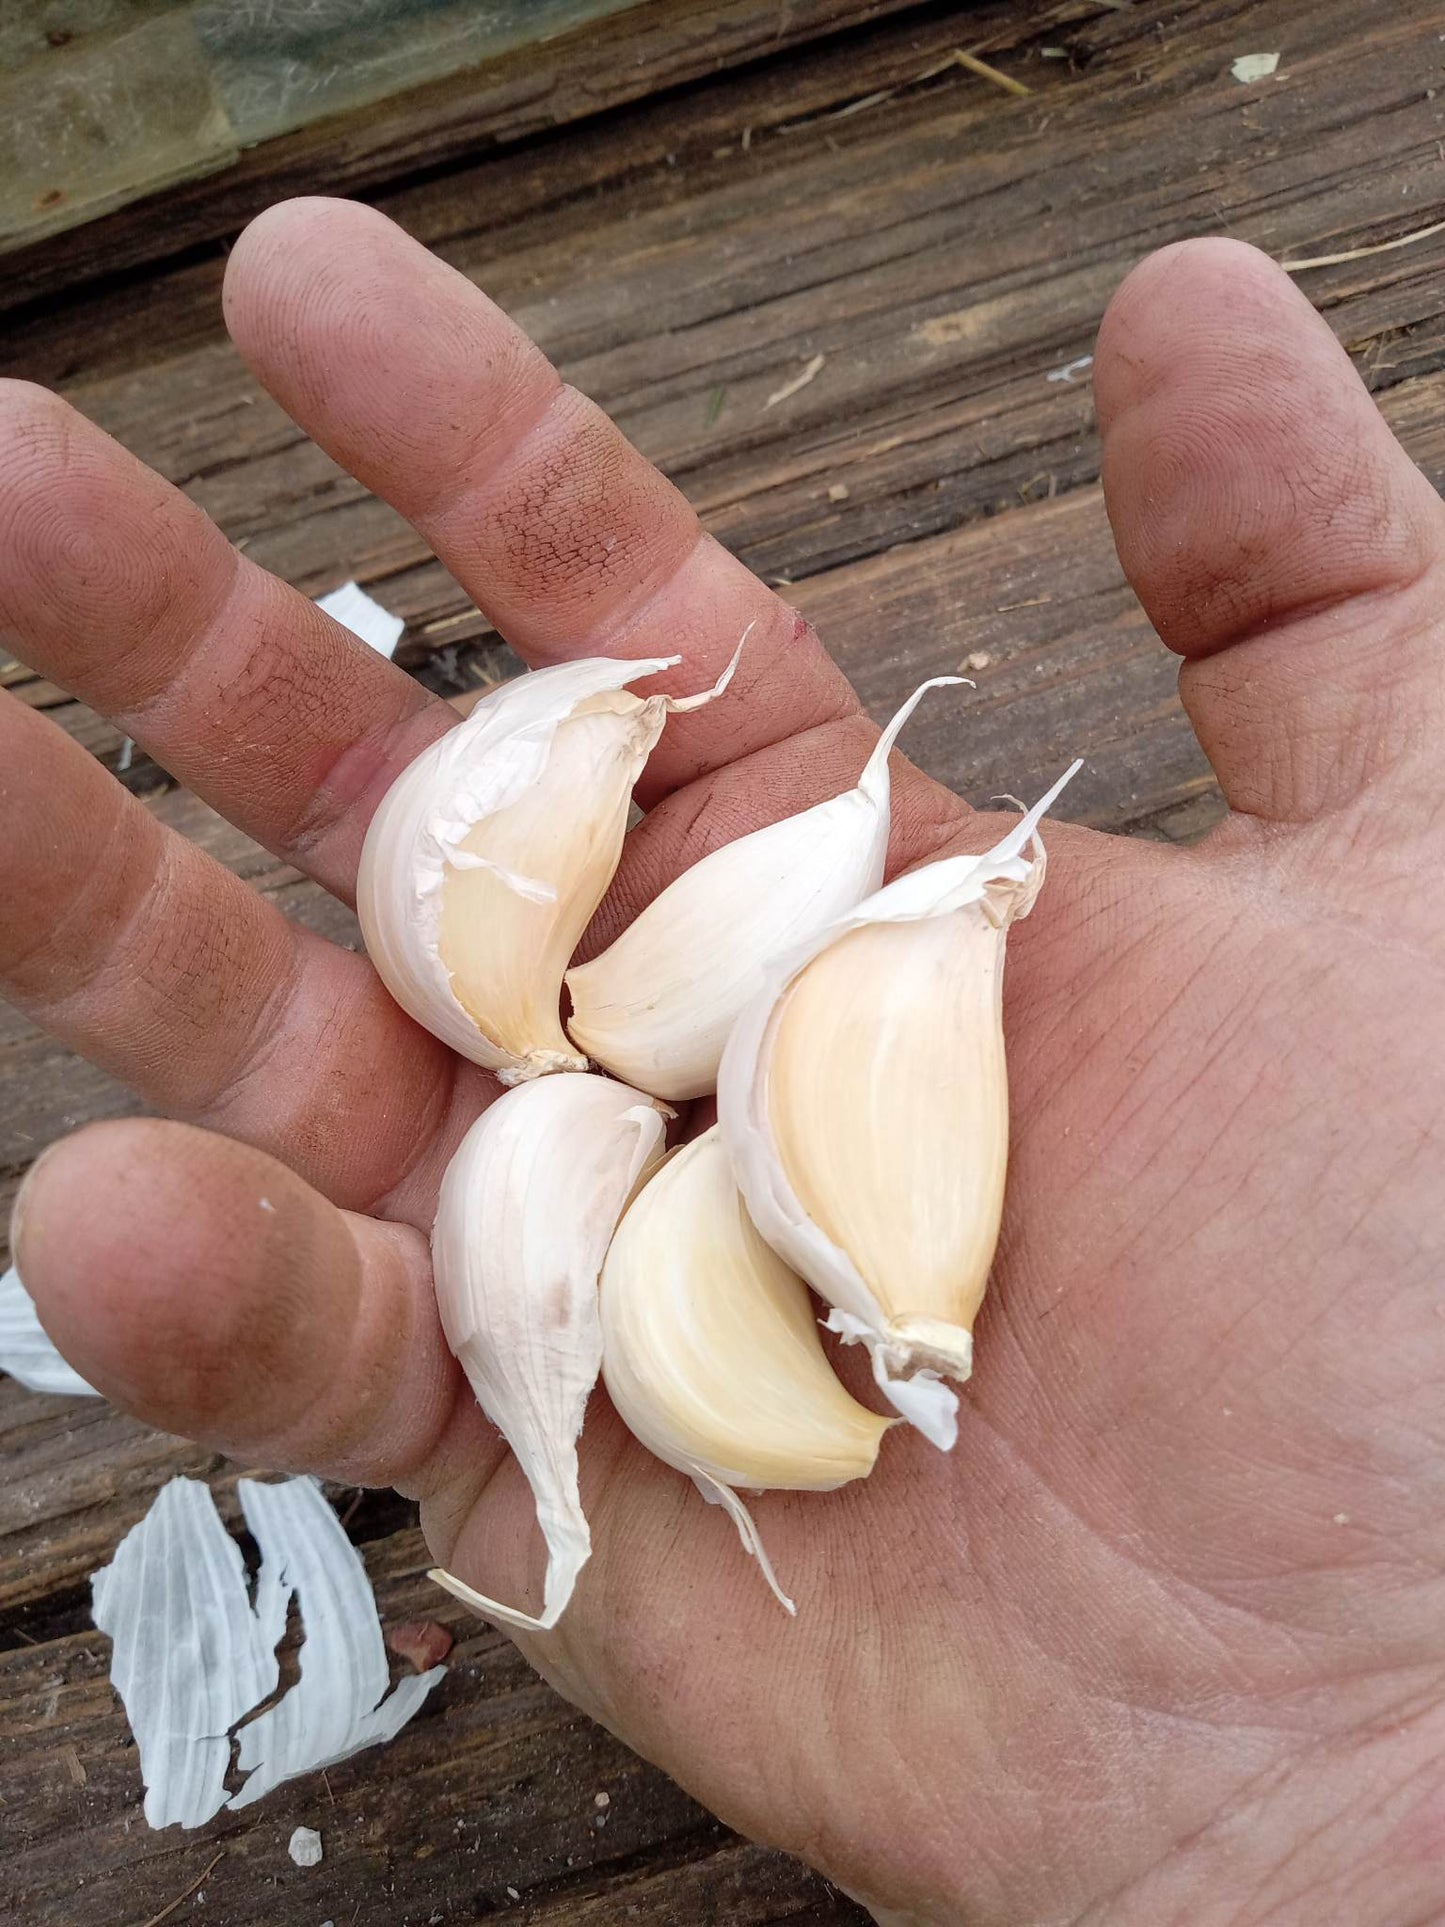 Softneck SPRING Garlic [$26/LB]